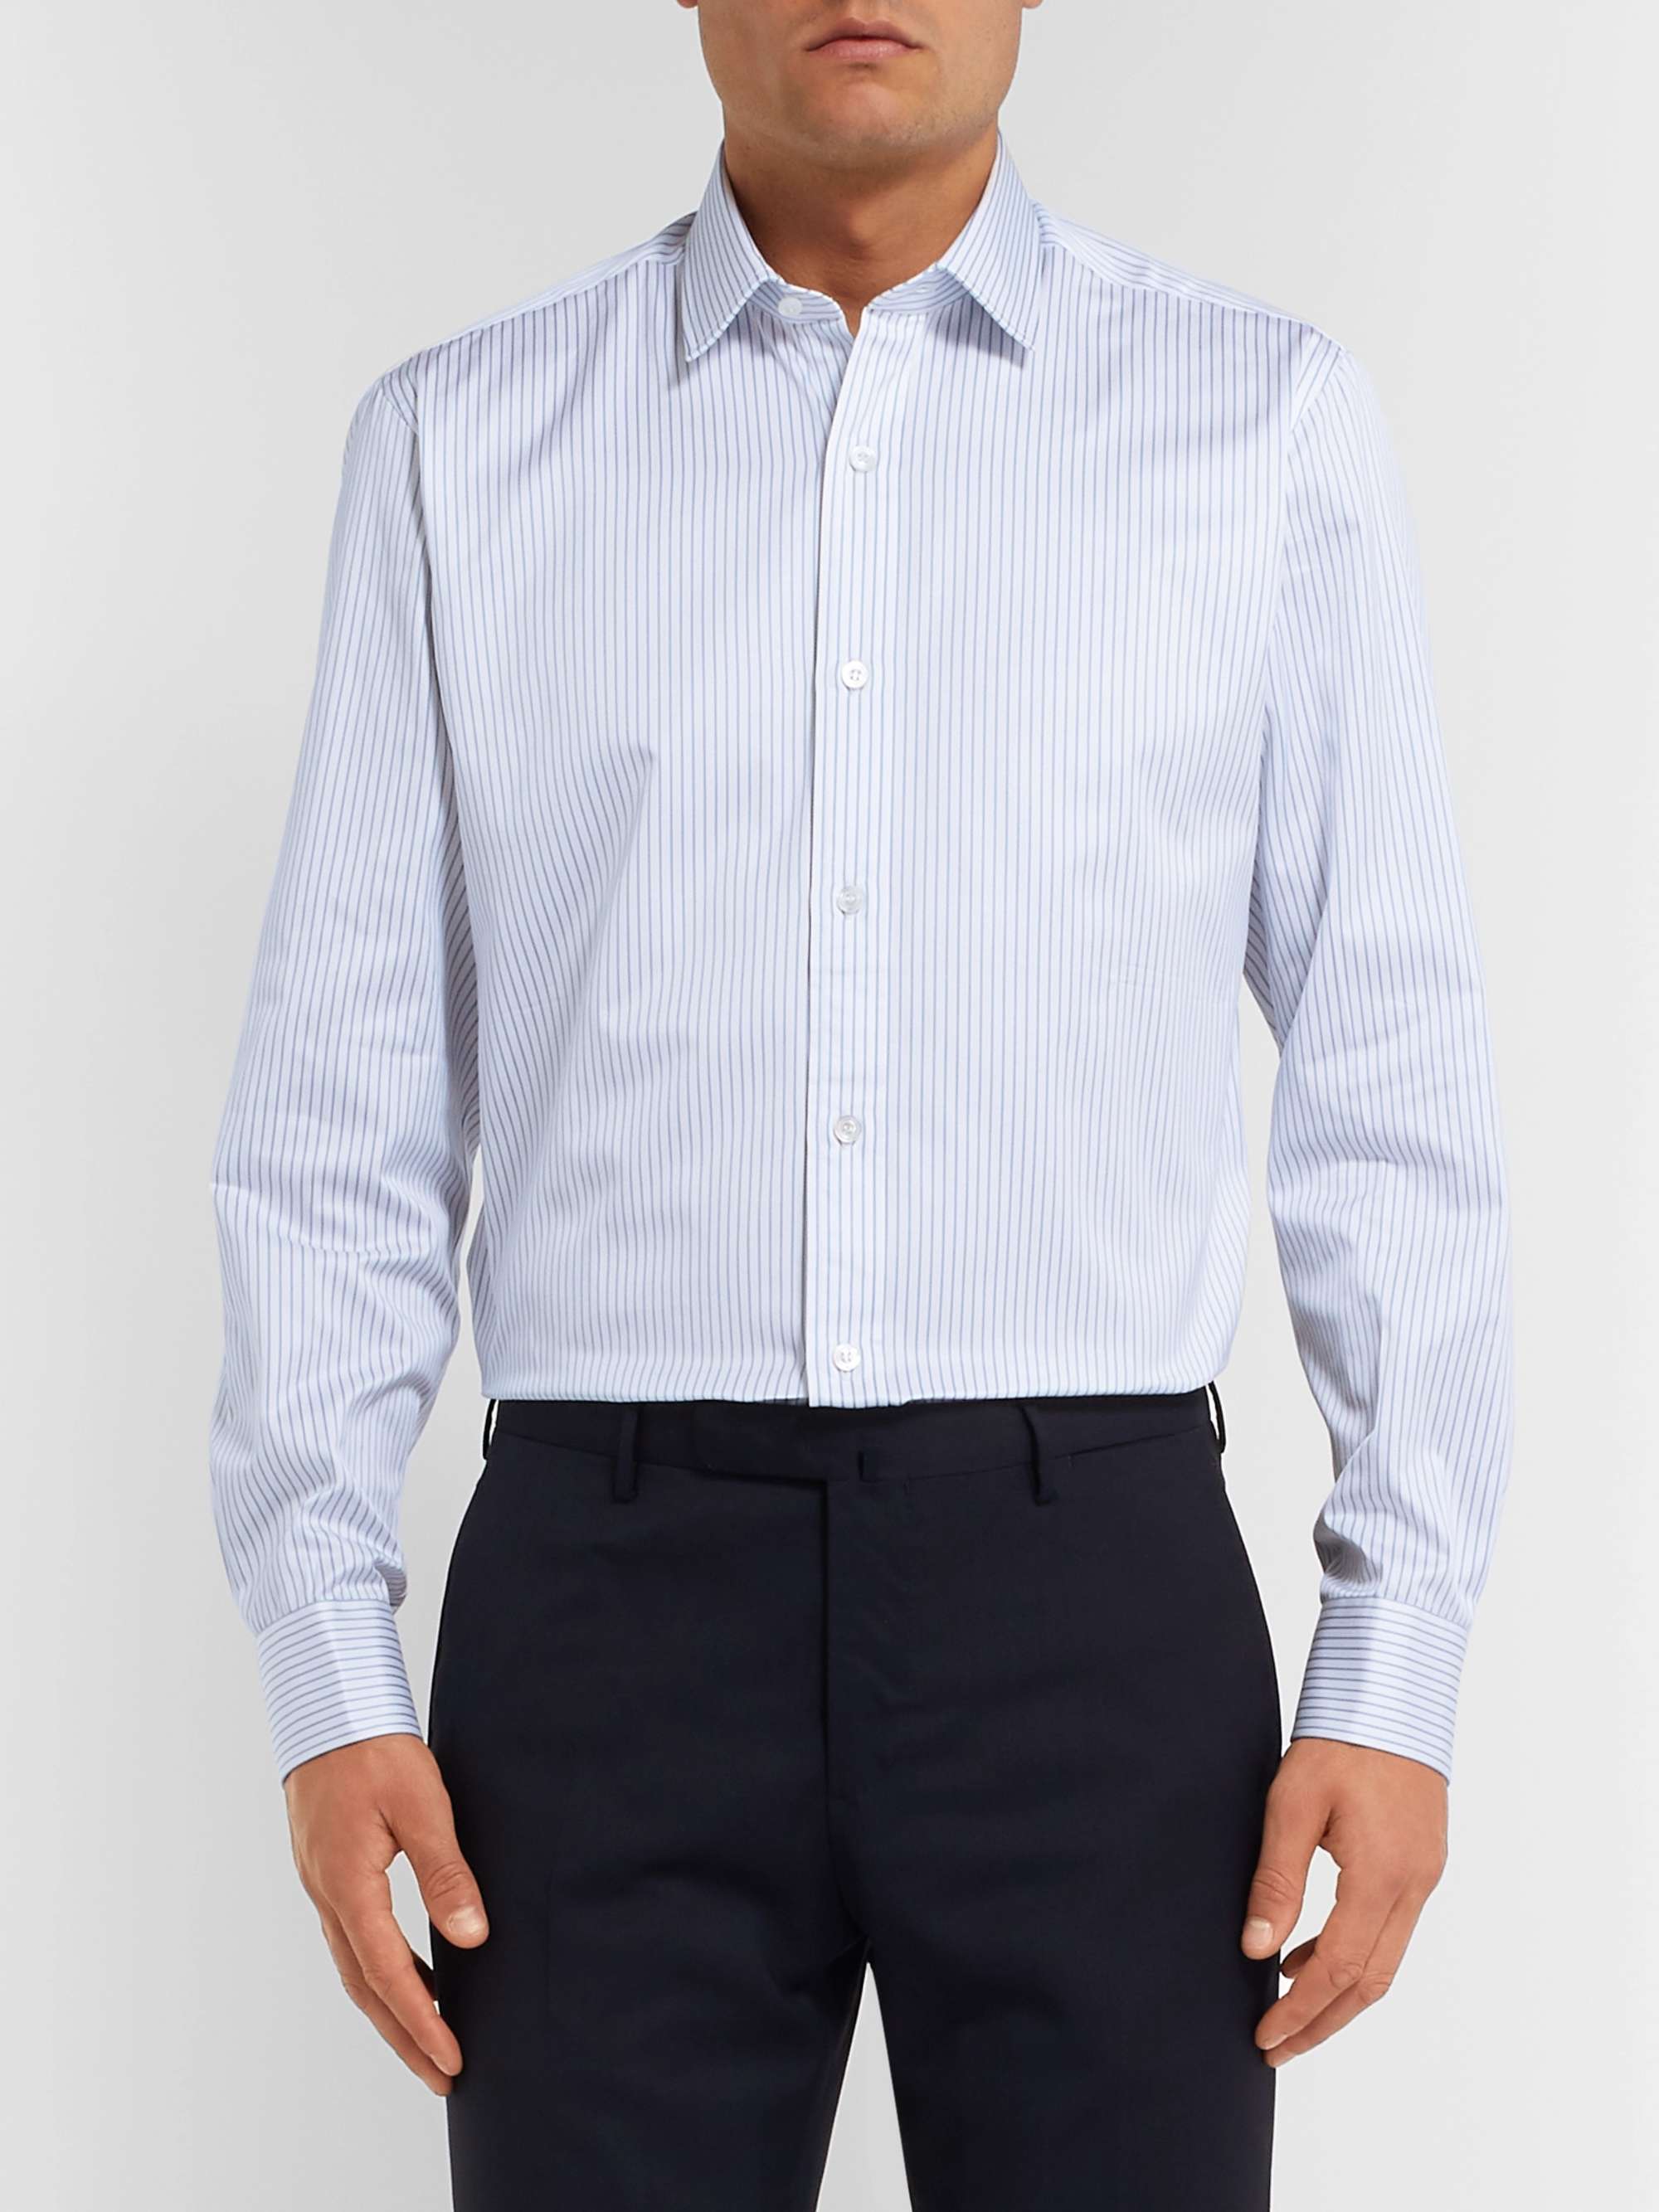 CHARVET Blue Striped Cotton-Poplin Shirt